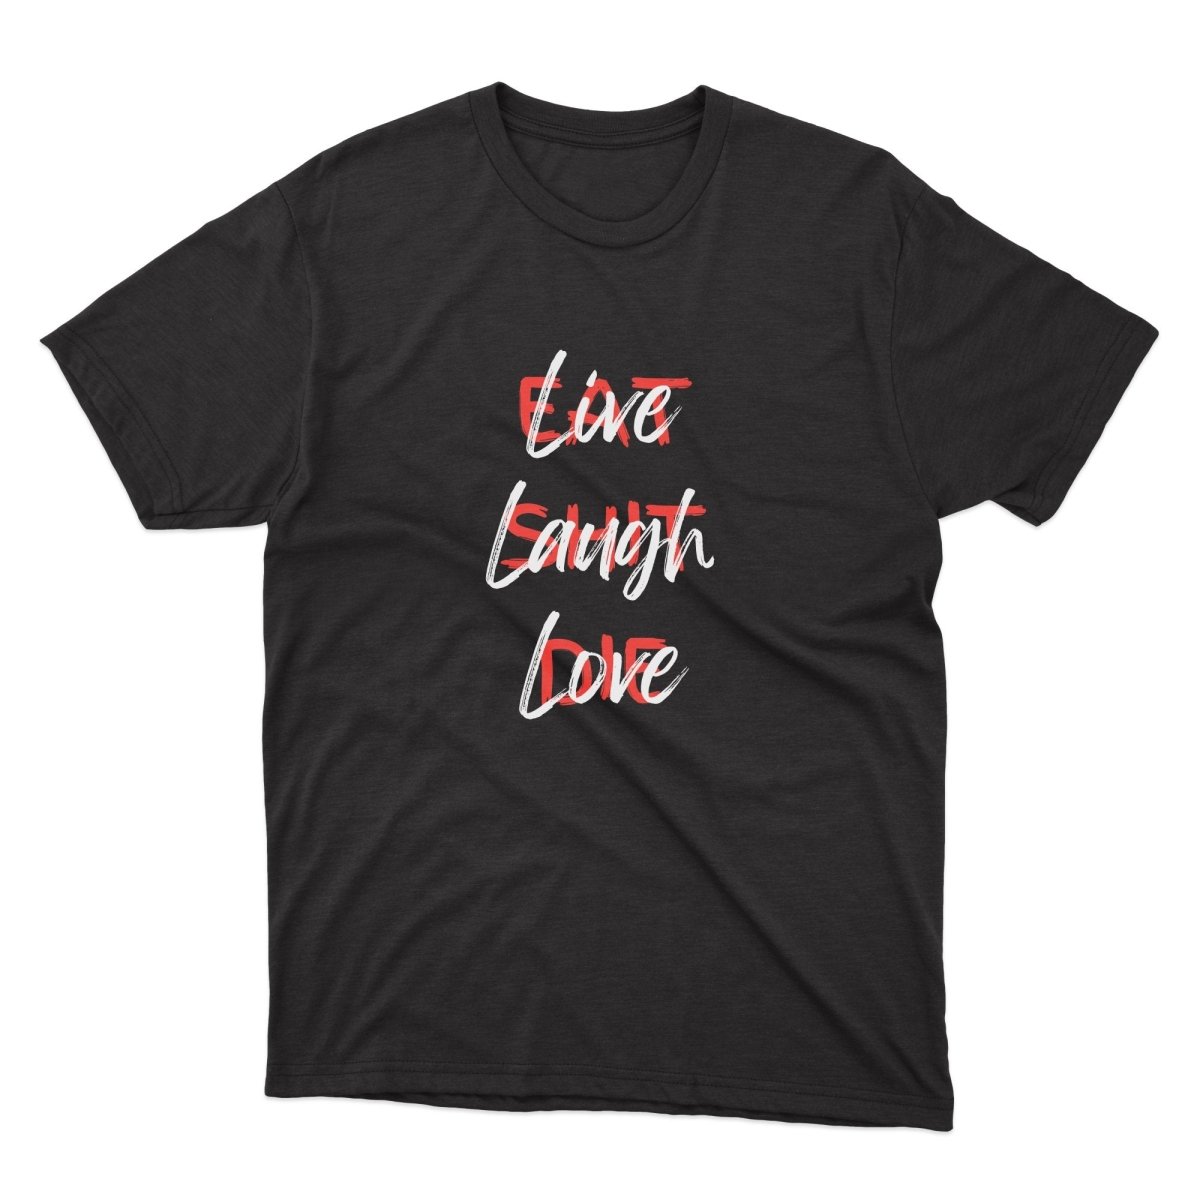 Live Laugh Love, Eat Shit Die Shirt - stickerbullLive Laugh Love, Eat Shit Die ShirtShirtsPrintifystickerbull29935148781460389577BlackSa black t - shirt that says live laugh love